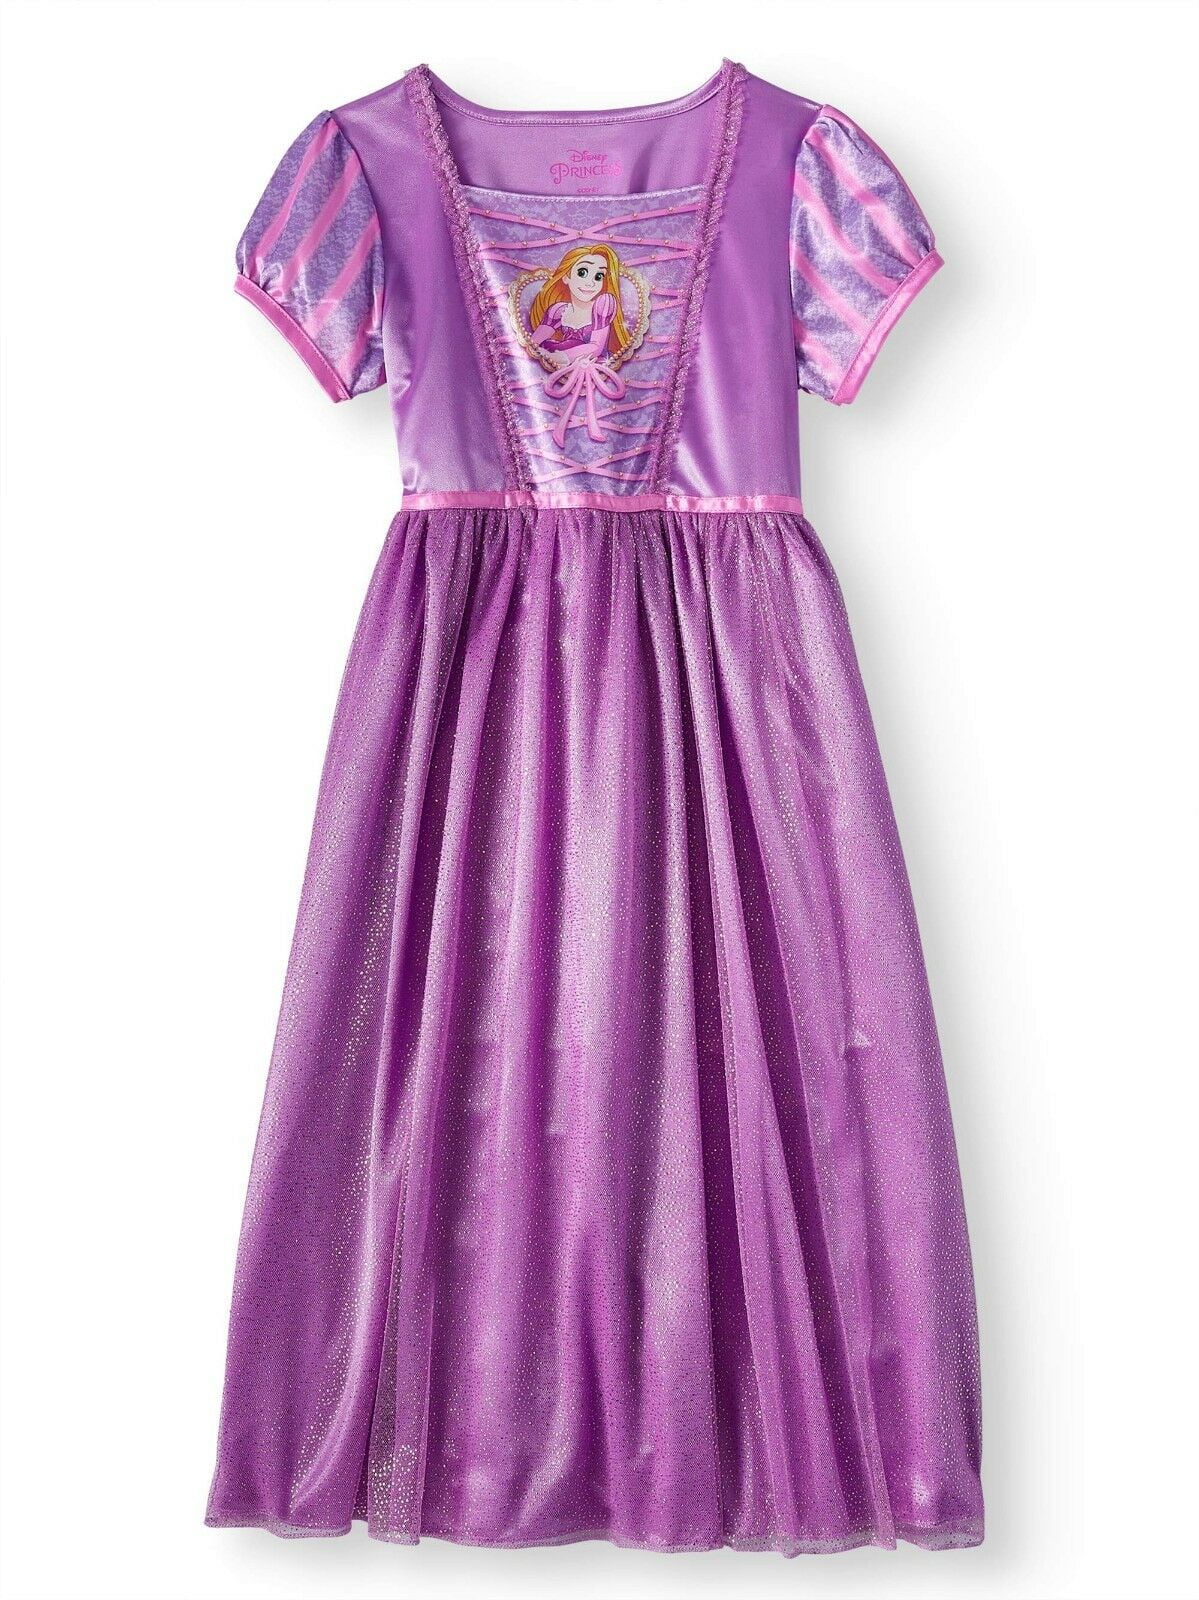 Disney Store Princess Rapunzel Short Sleeve Nightgown Pajama Girl Size 7/8 